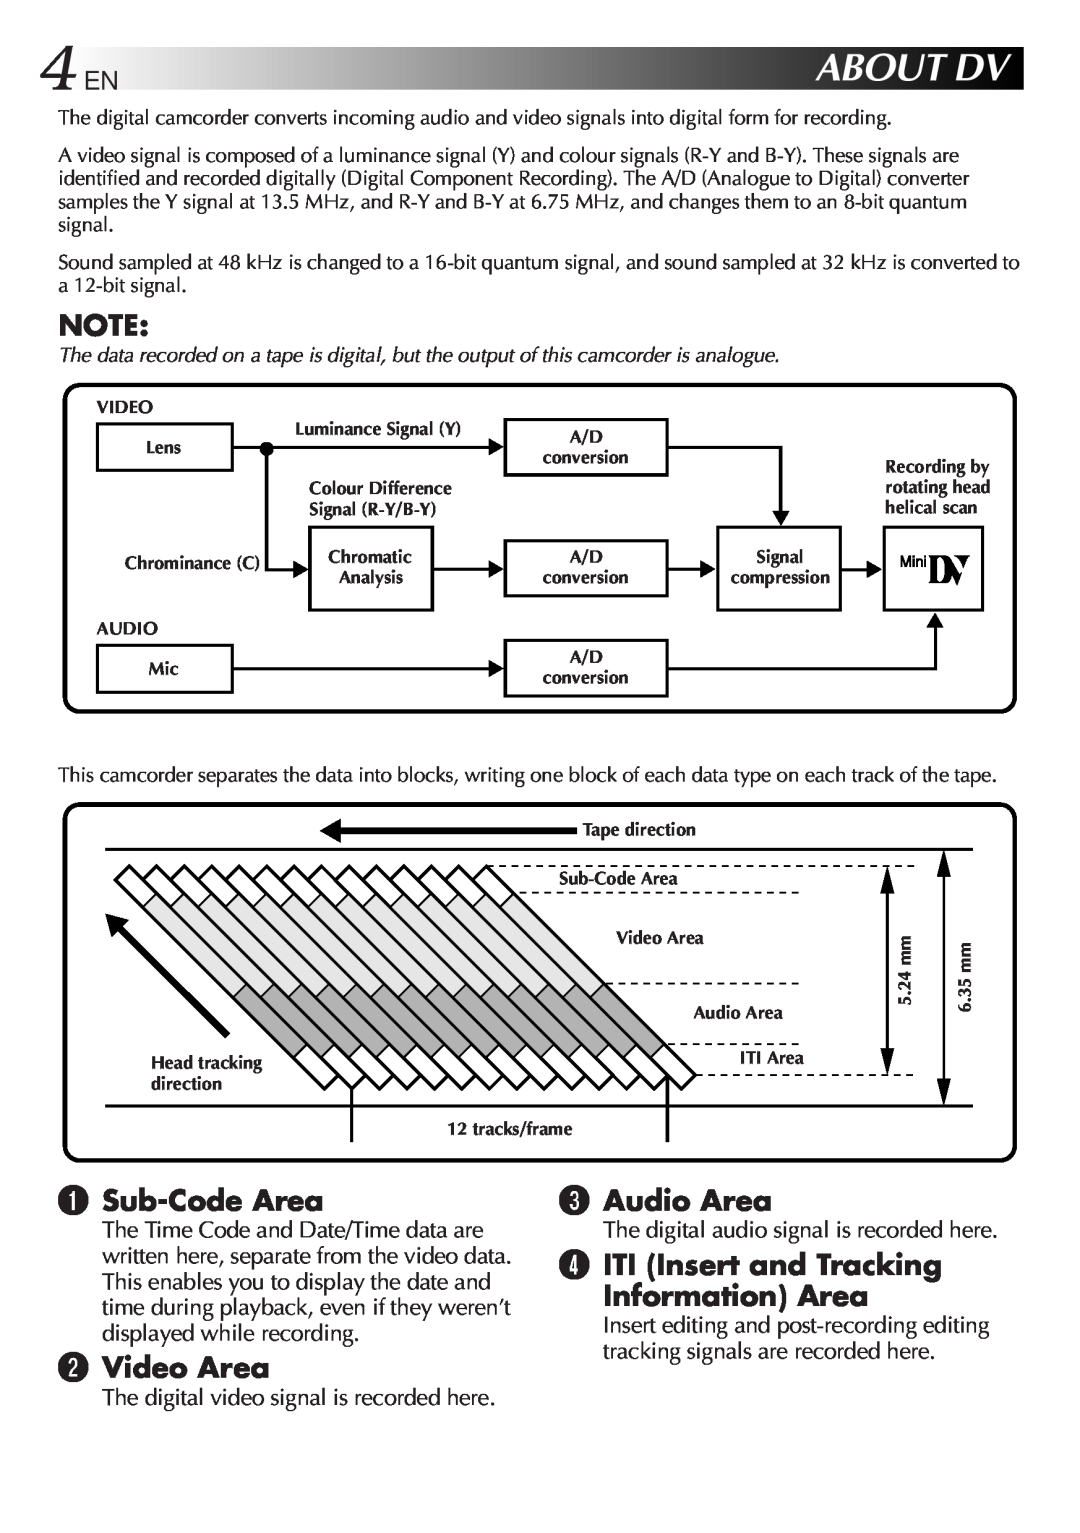 JVC LYT0242-001A manual Aboutdv, Sub-Code Area, Video Area, Audio Area, ITI Insert and Tracking Information Area 